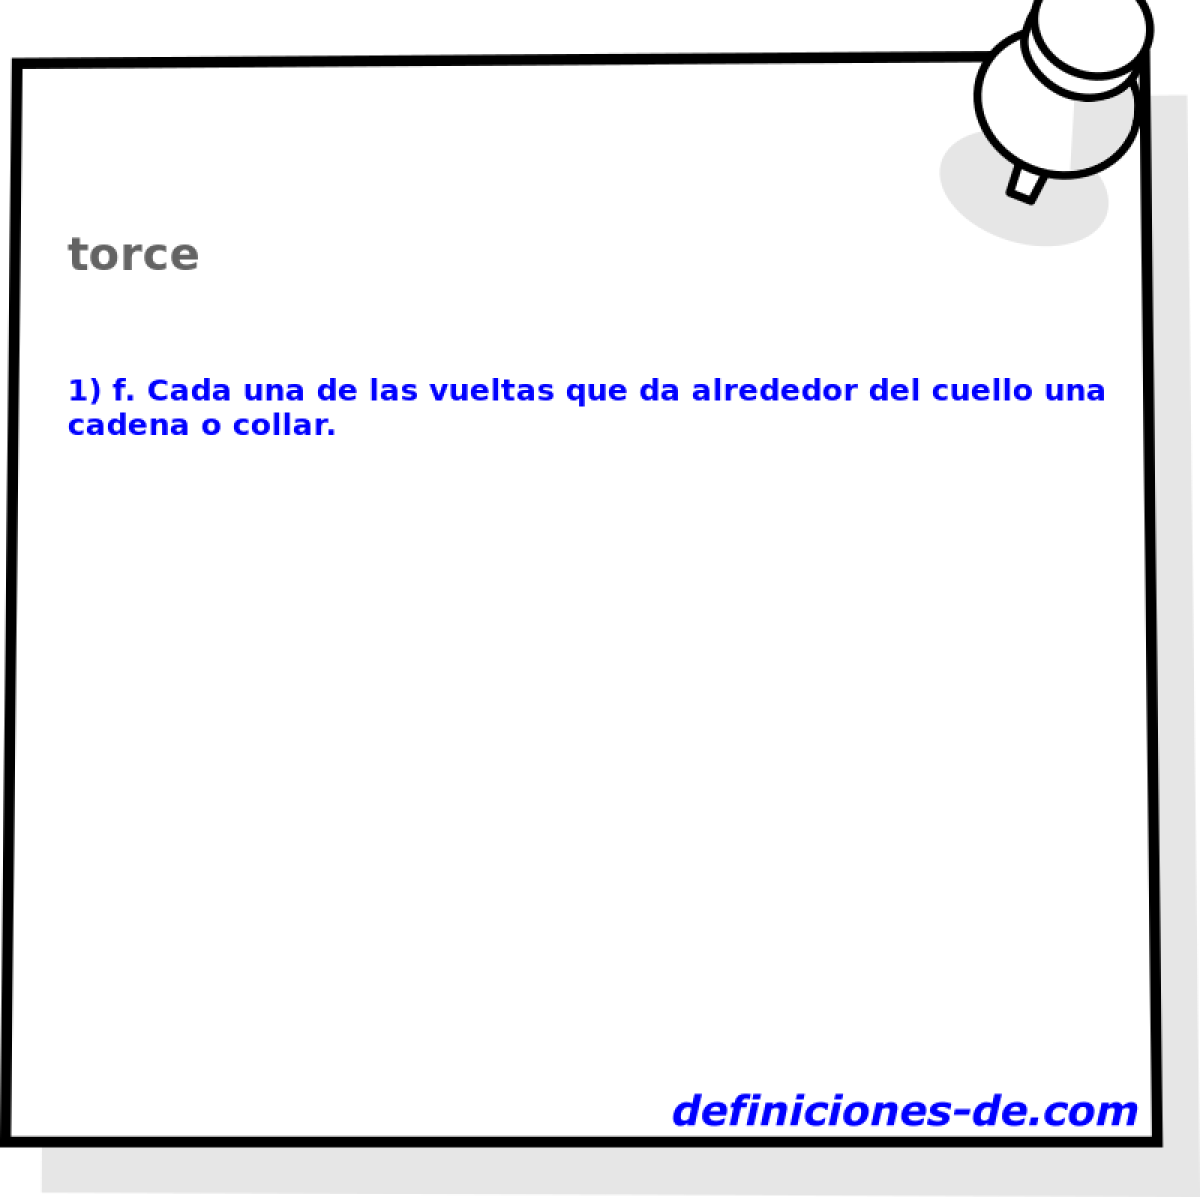 torce 